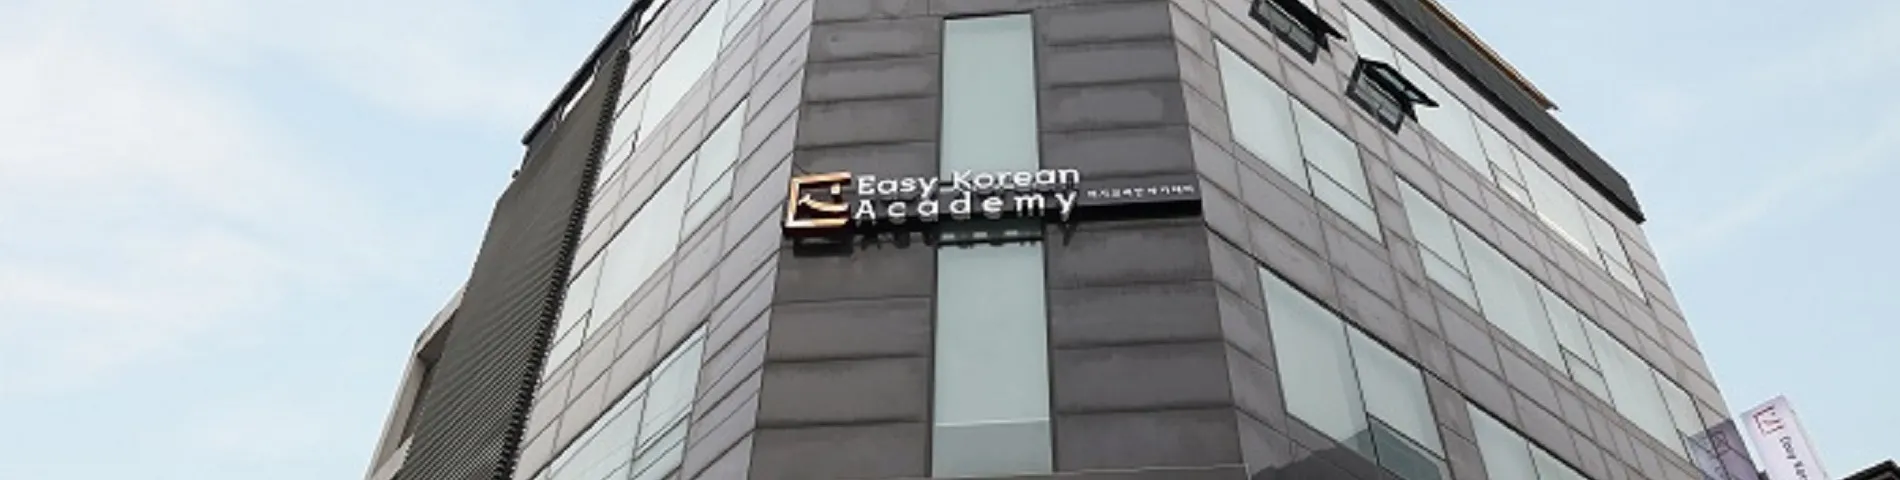 Imatge 1 de l'escola Easy Korean Academy